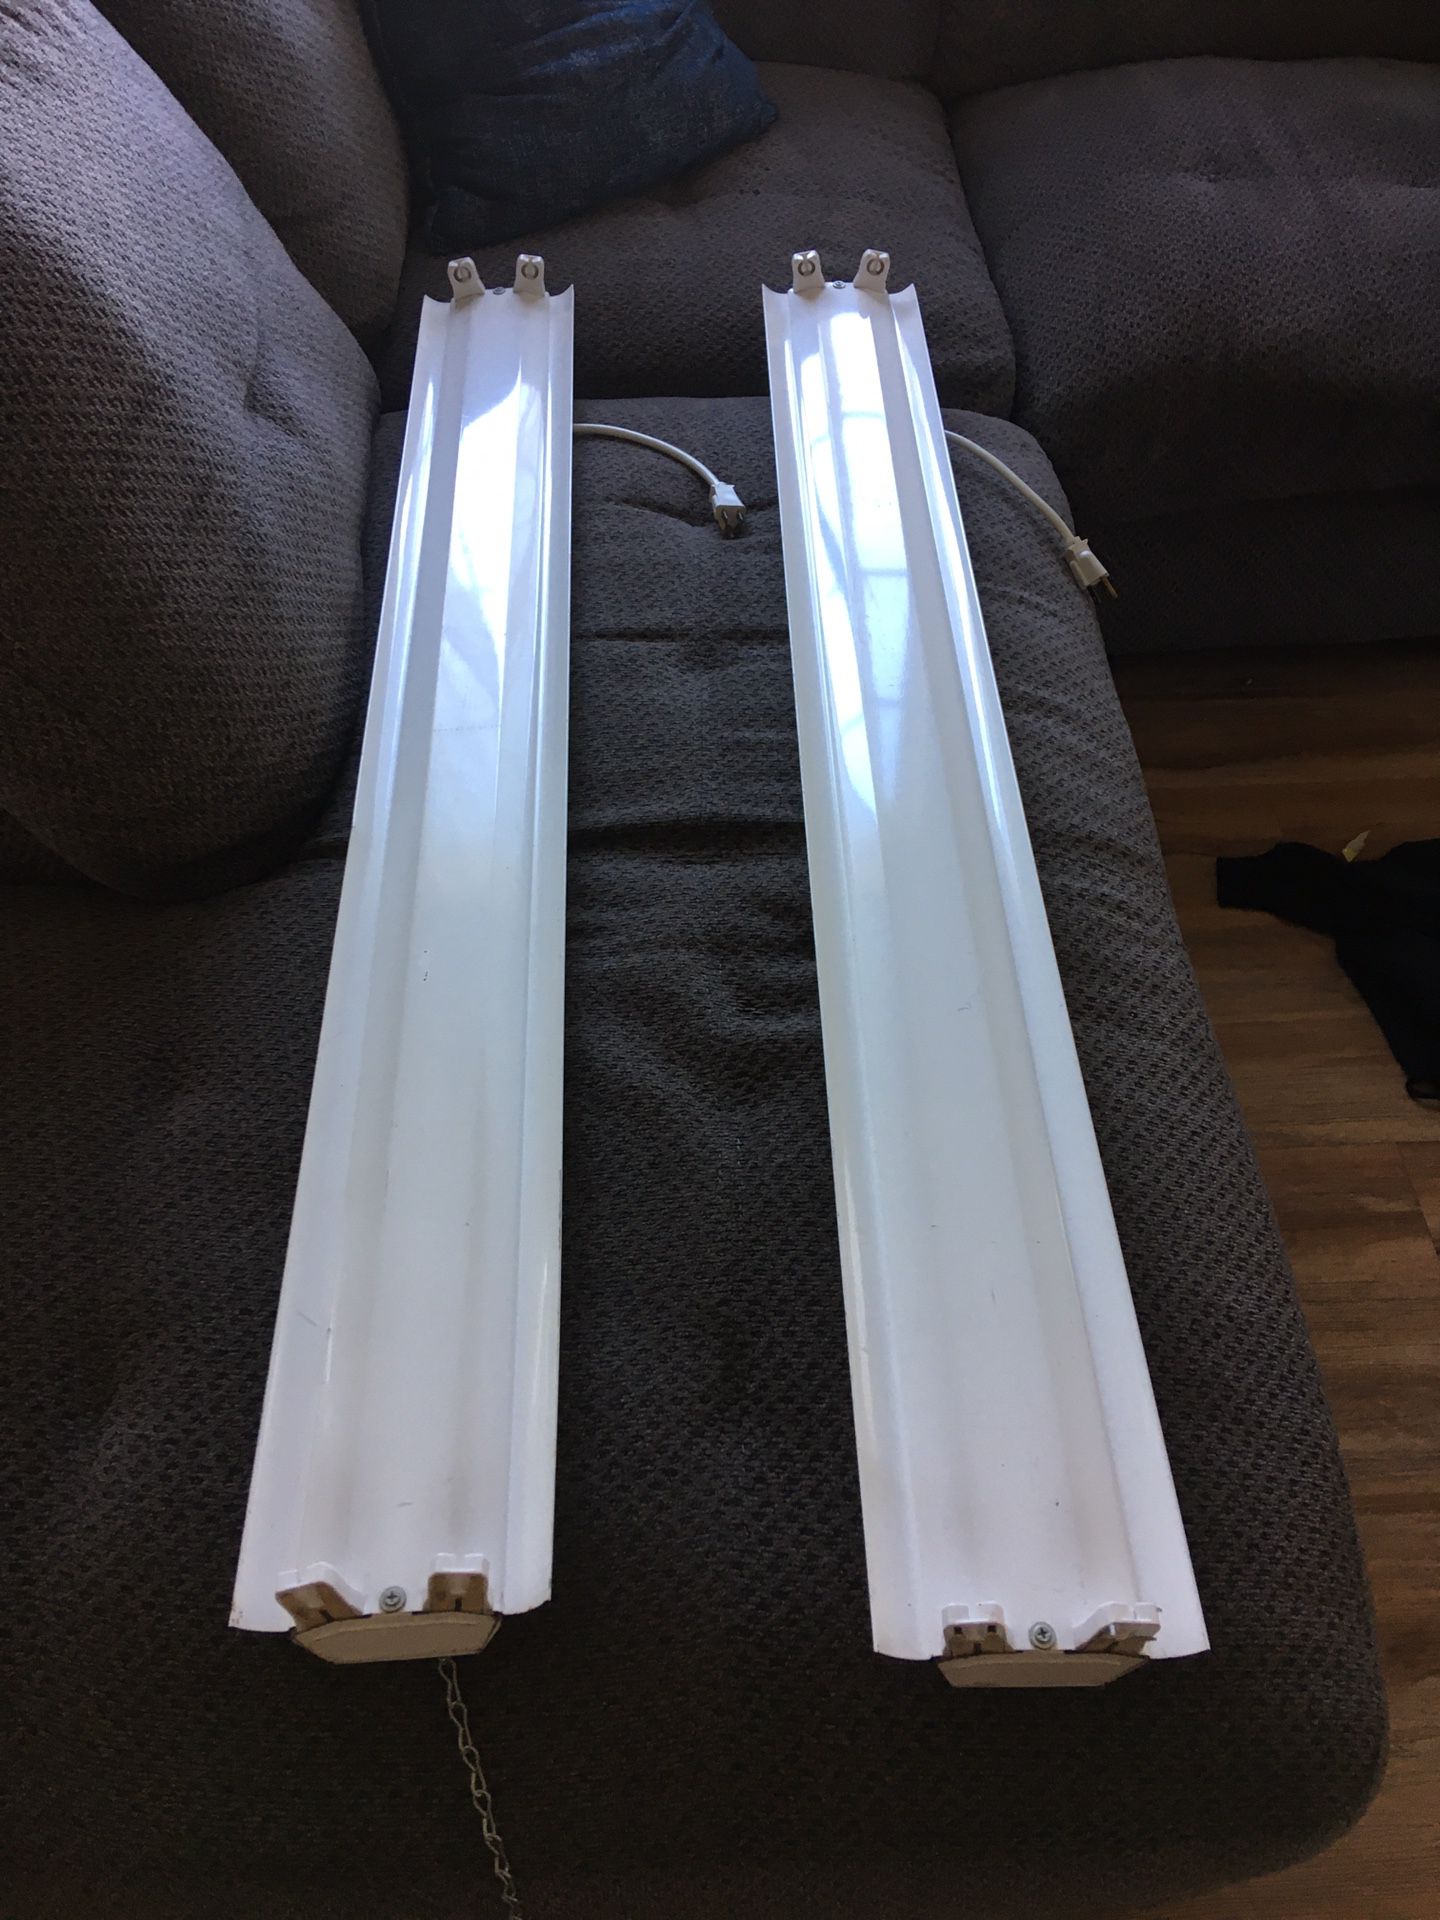 Pair of fluorescent light fixtures